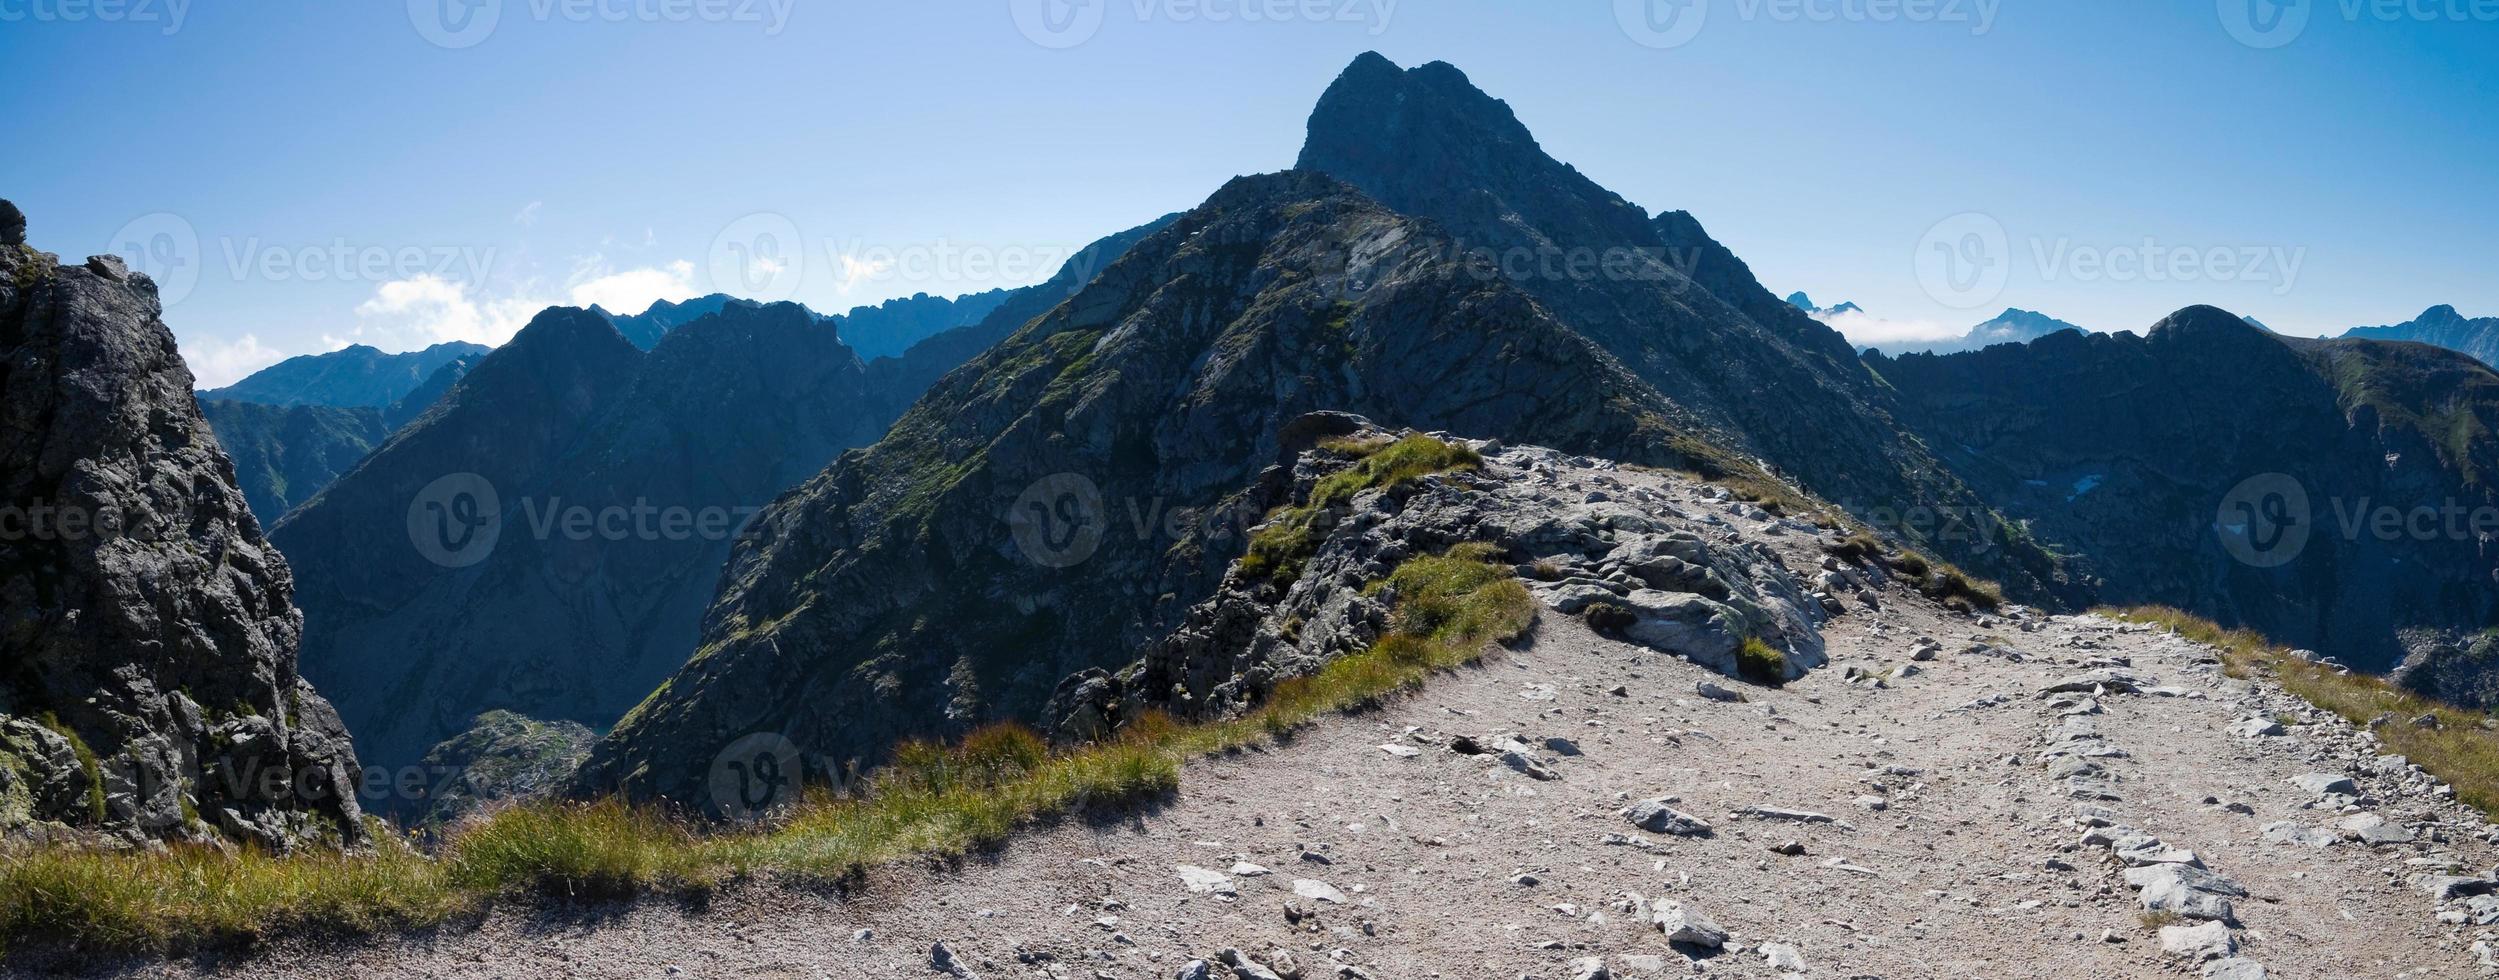 polnische hohe tatras berge. foto